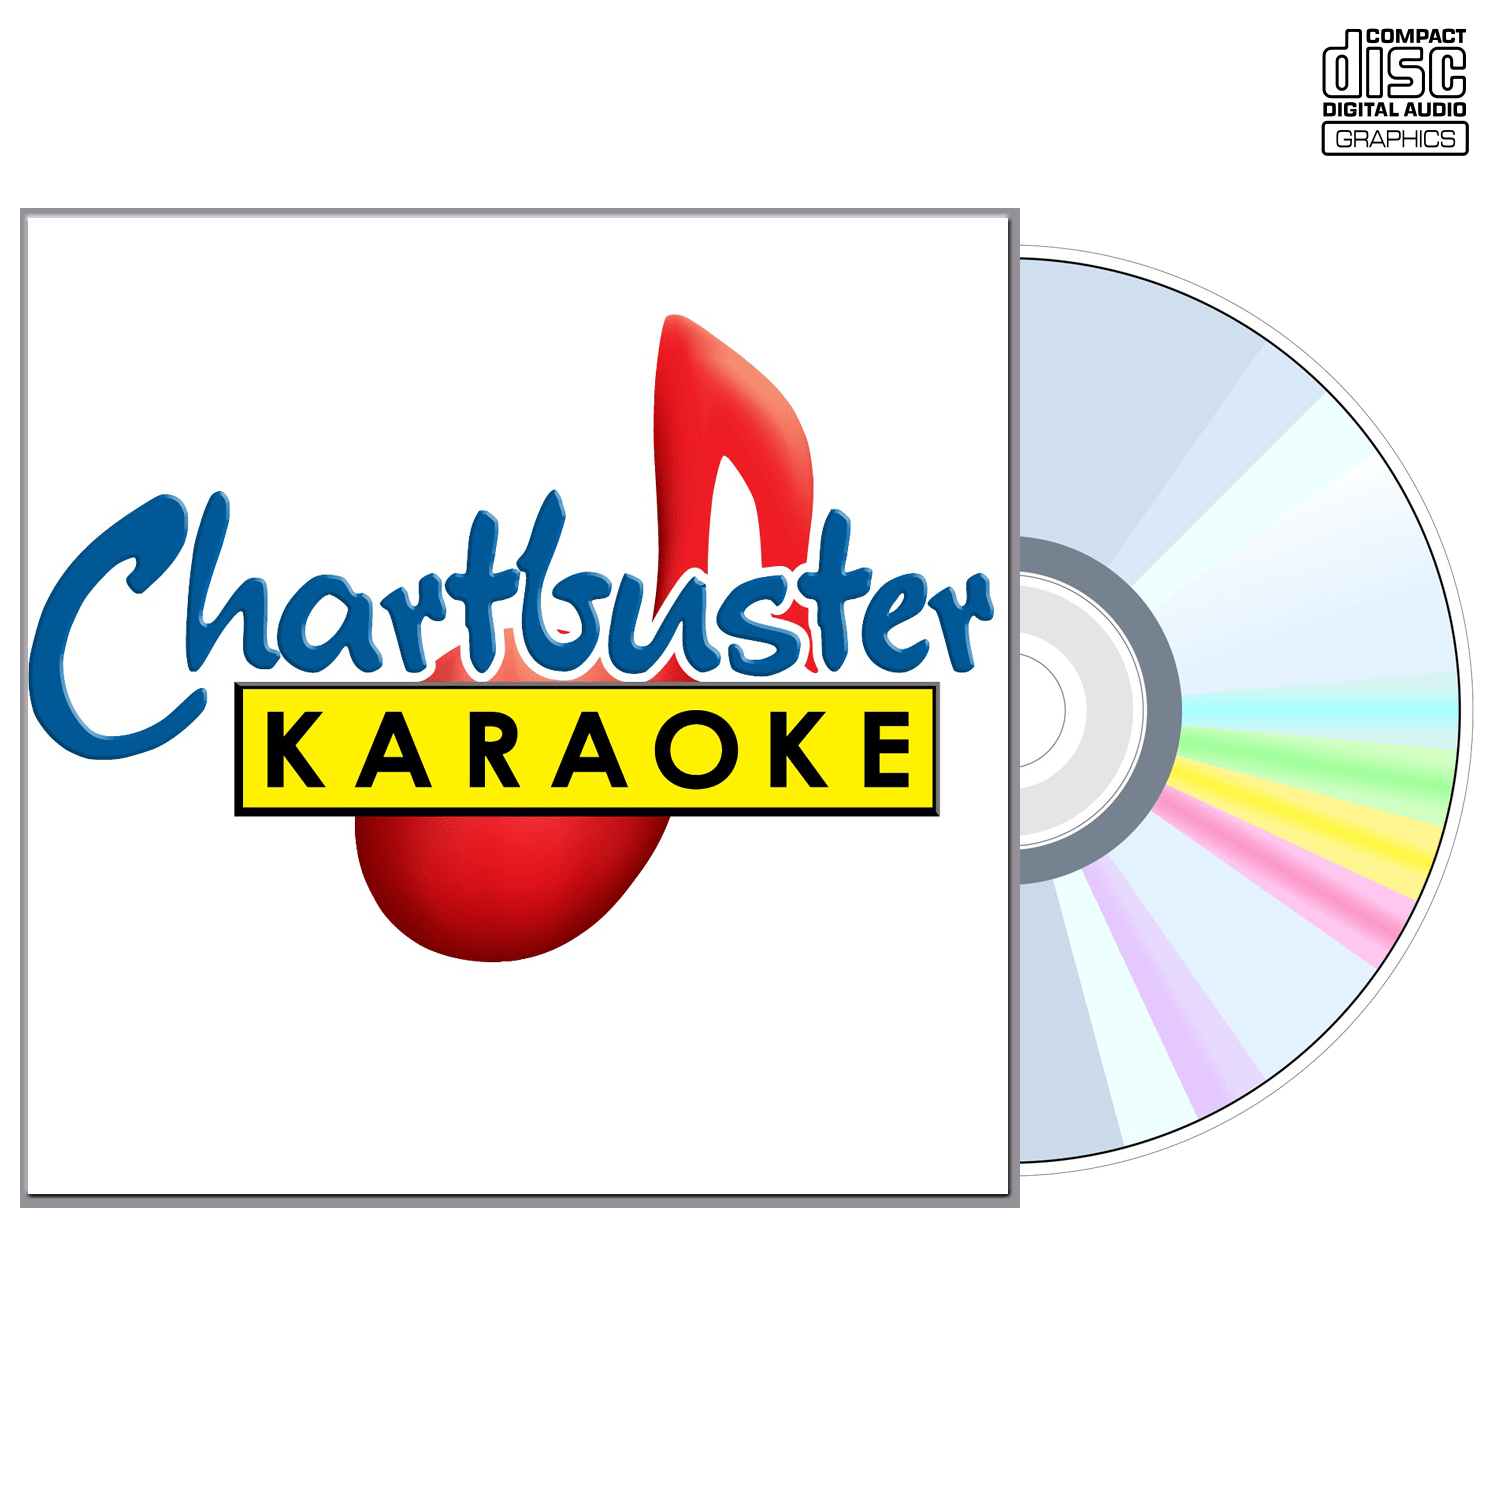 Jimmy Buffett - CD+G - Chartbuster Karaoke - Karaoke Home Entertainment